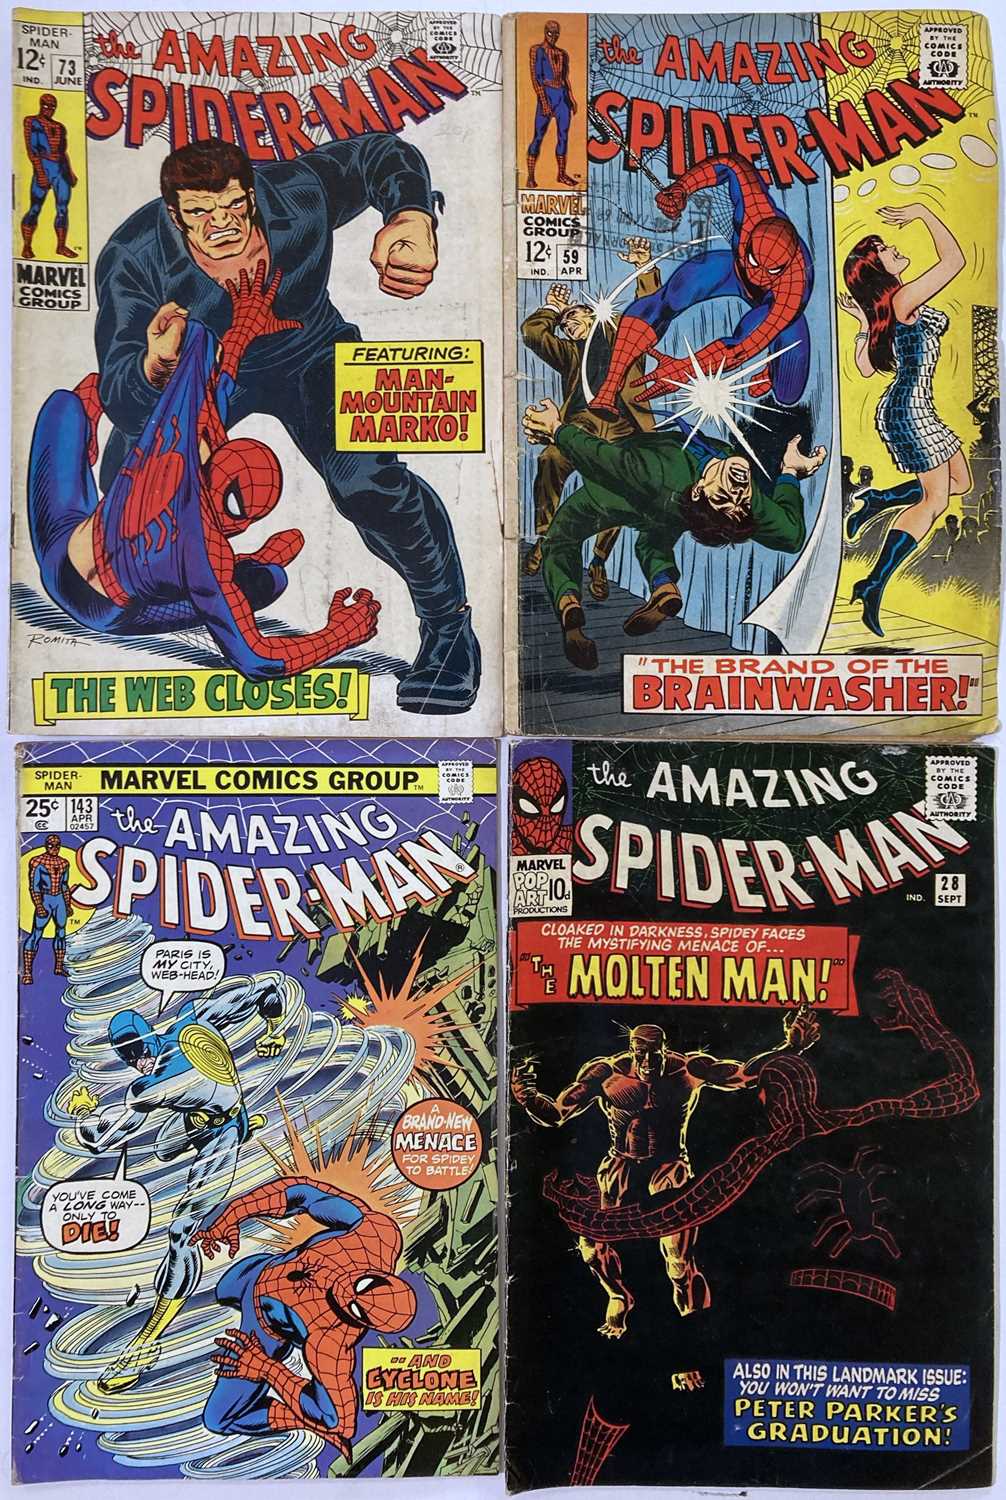 Lot 60 - THE AMAZING SPIDERMAN - 1960S MARVEL COMICS-